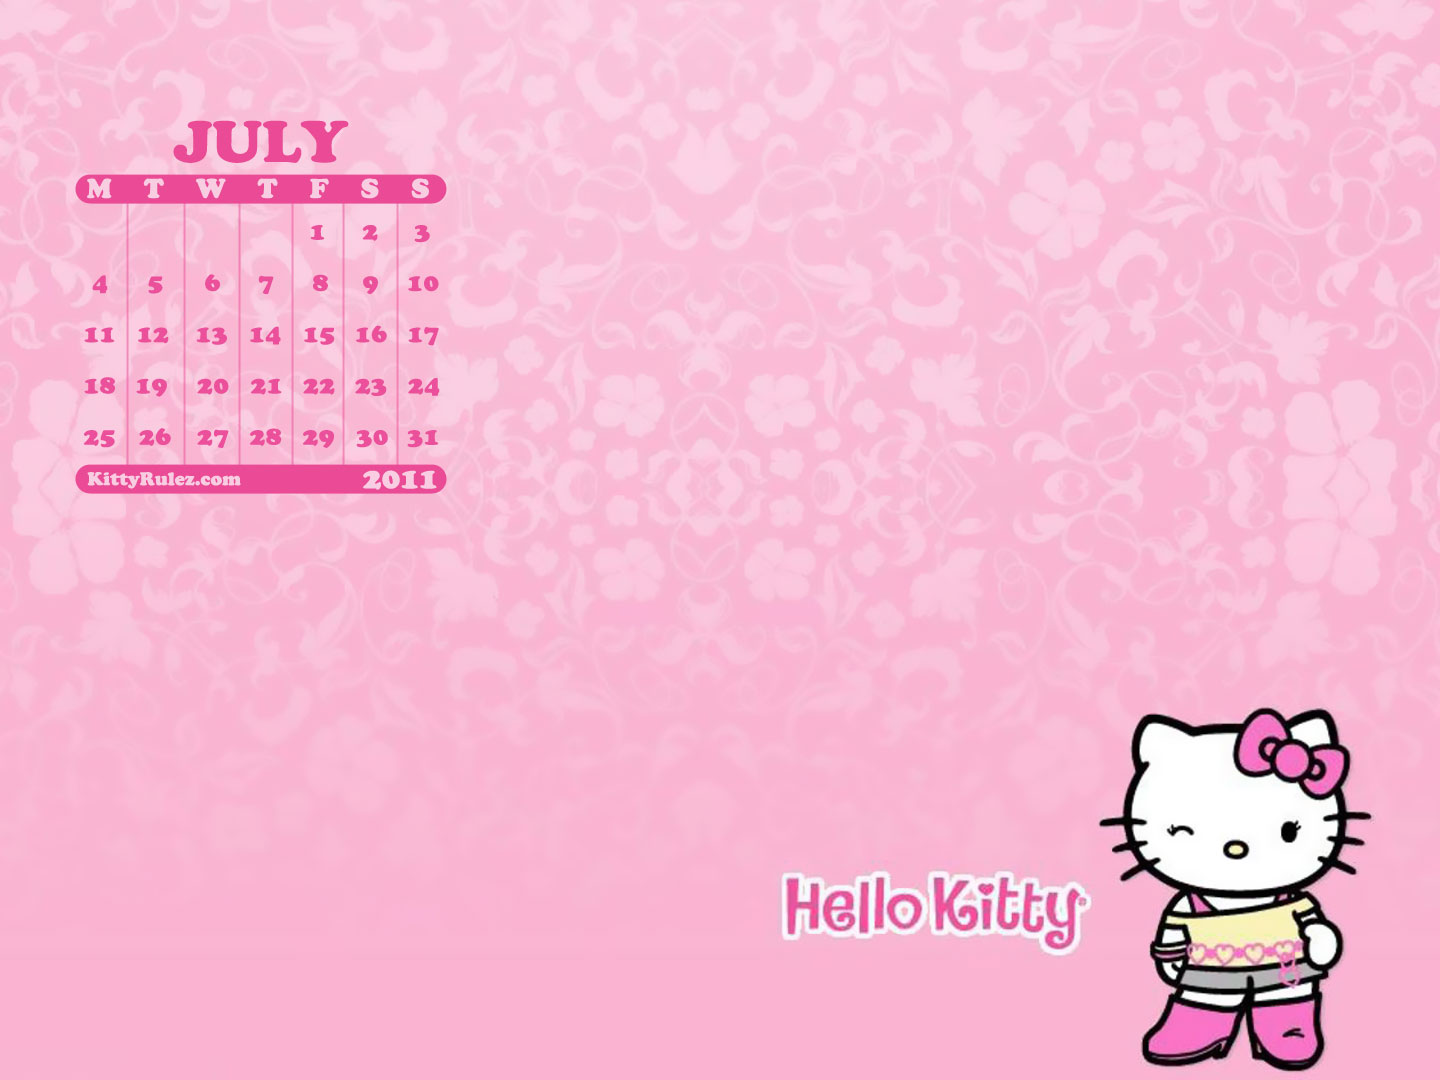 http://1.bp.blogspot.com/-og9xpQNHKyw/Tg1NCYfjRHI/AAAAAAAADkU/AVGORwj80d4/s1600/kittyrulez-hellokitty-desktop-calendar-wallpaper-july2011.jpg